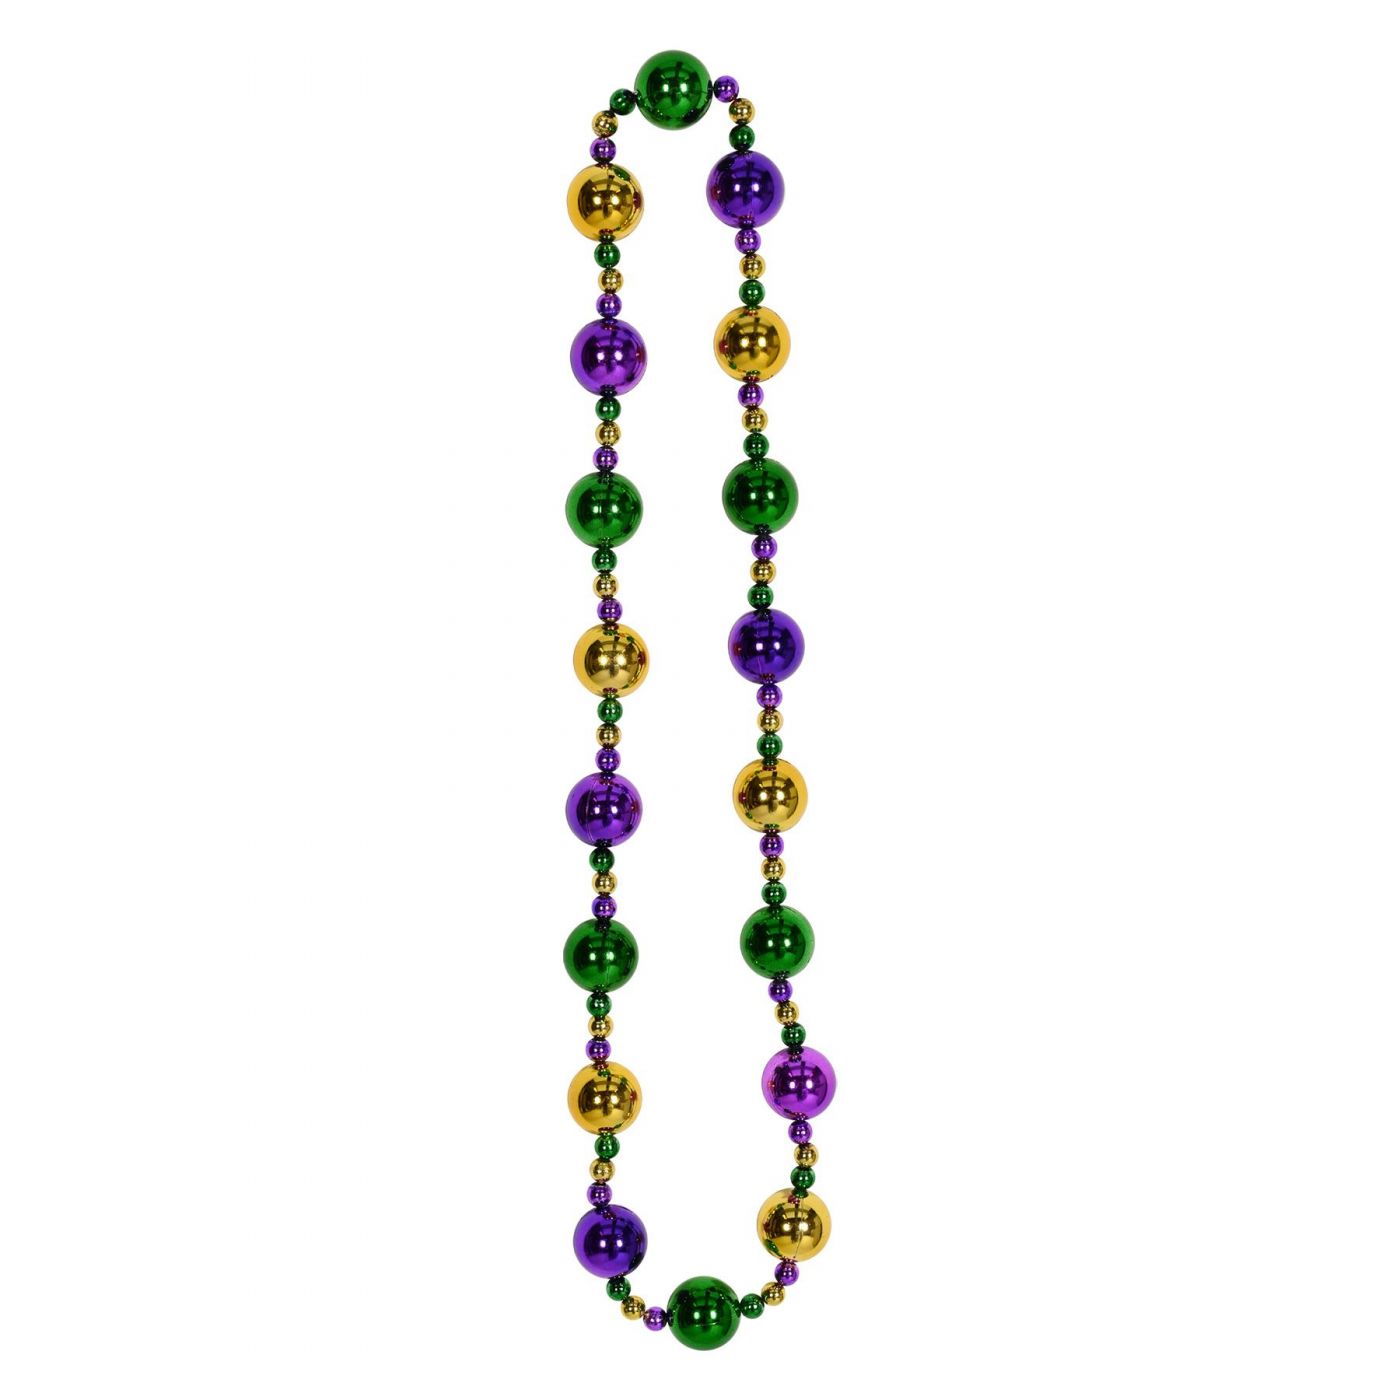 Jumbo Mardi Gras Beads (12) image